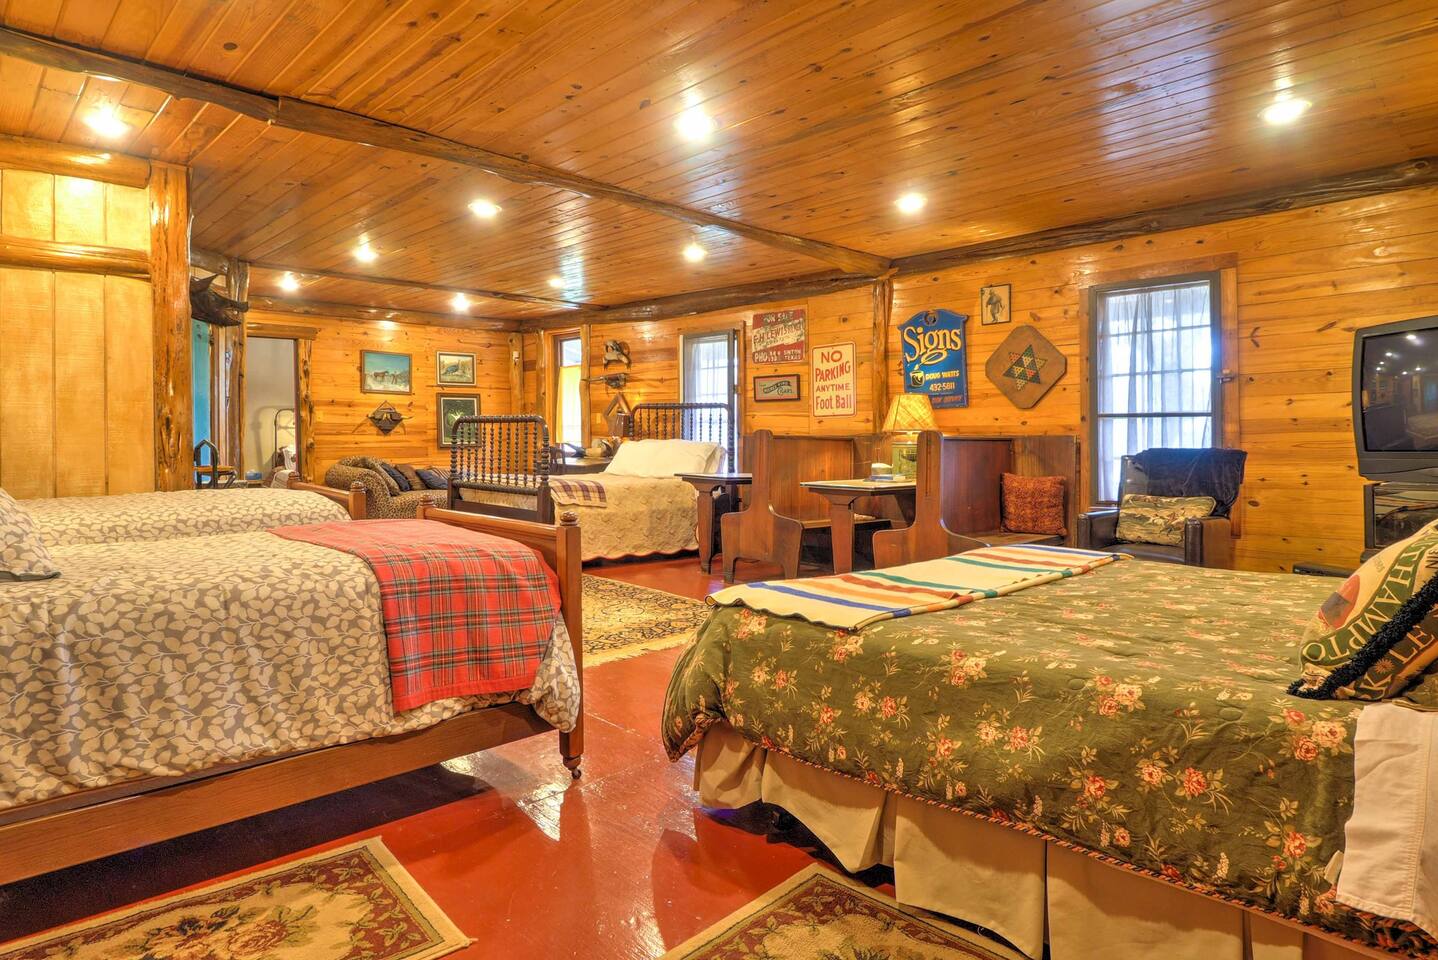 4 bedroom vacation cabin Huston